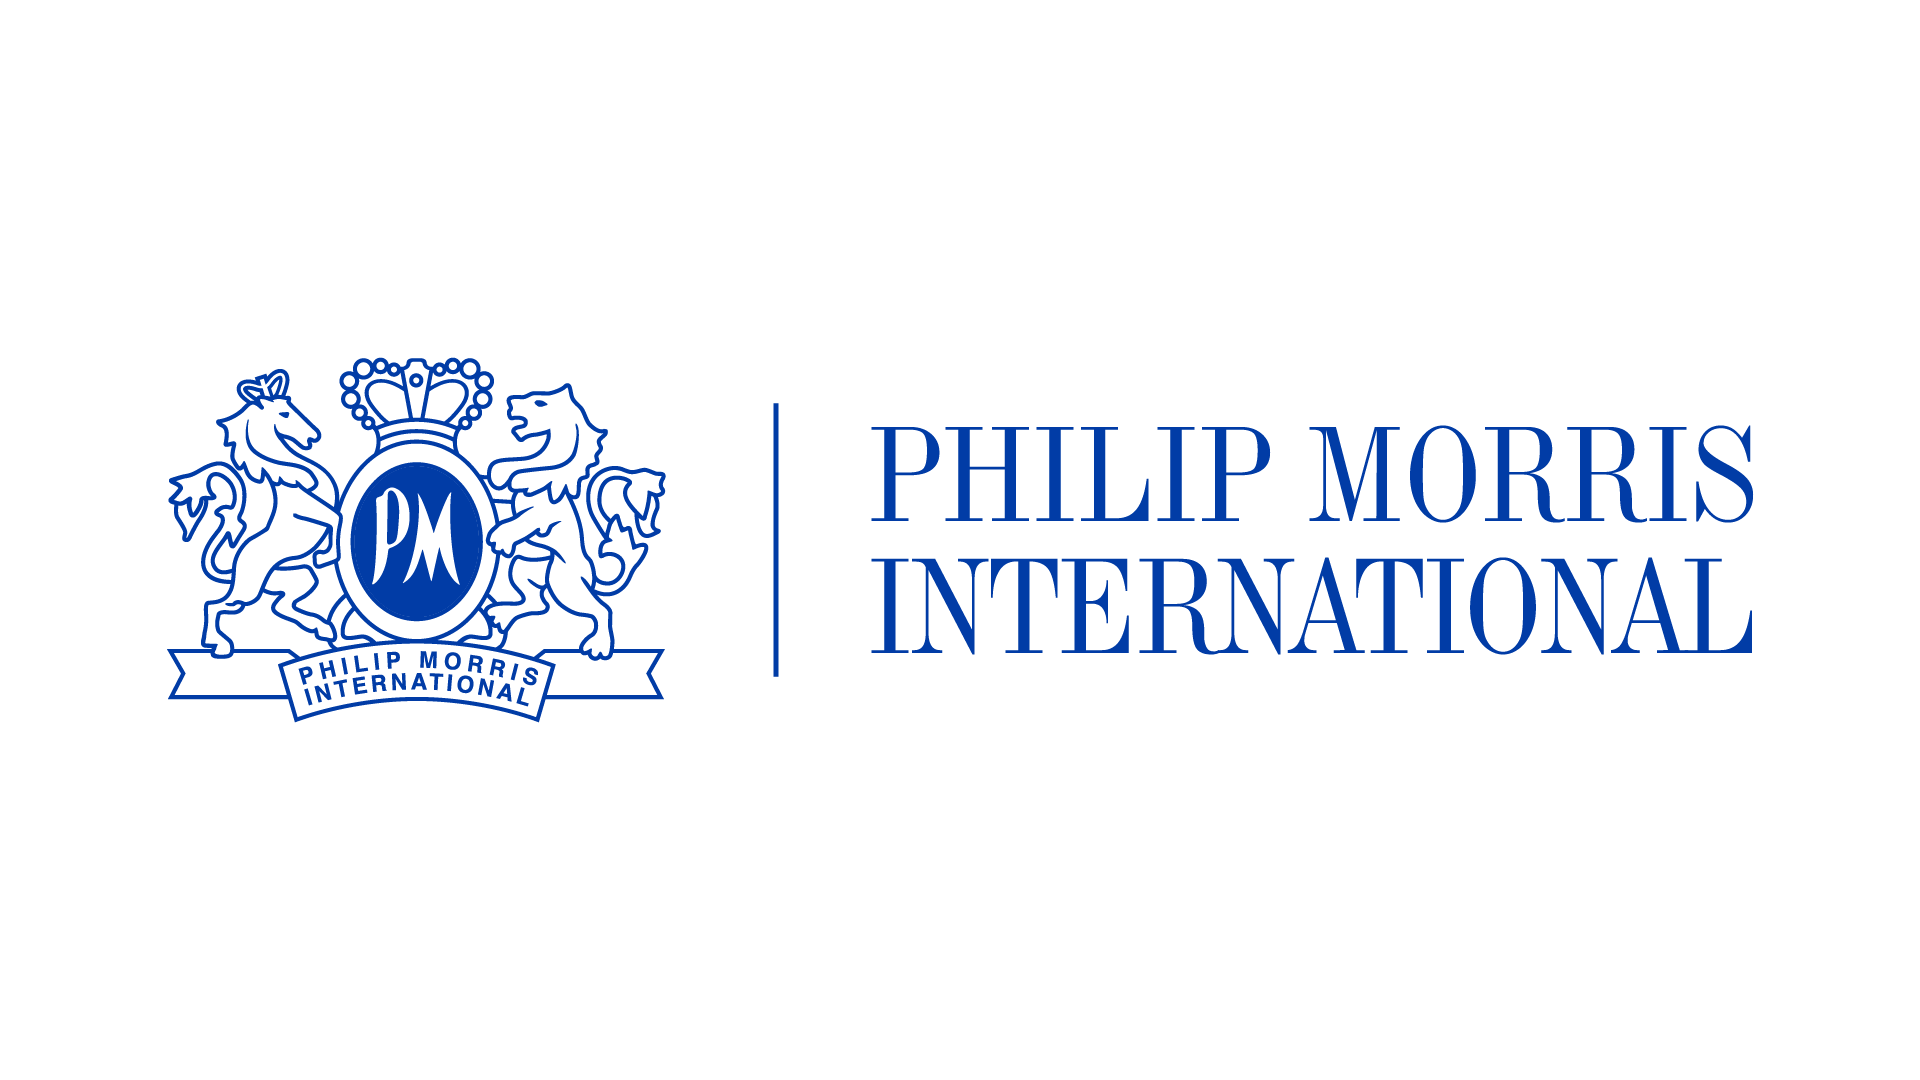 PMI - Philip Morris International - ФМИ - Филип Моррис Интернэшнл